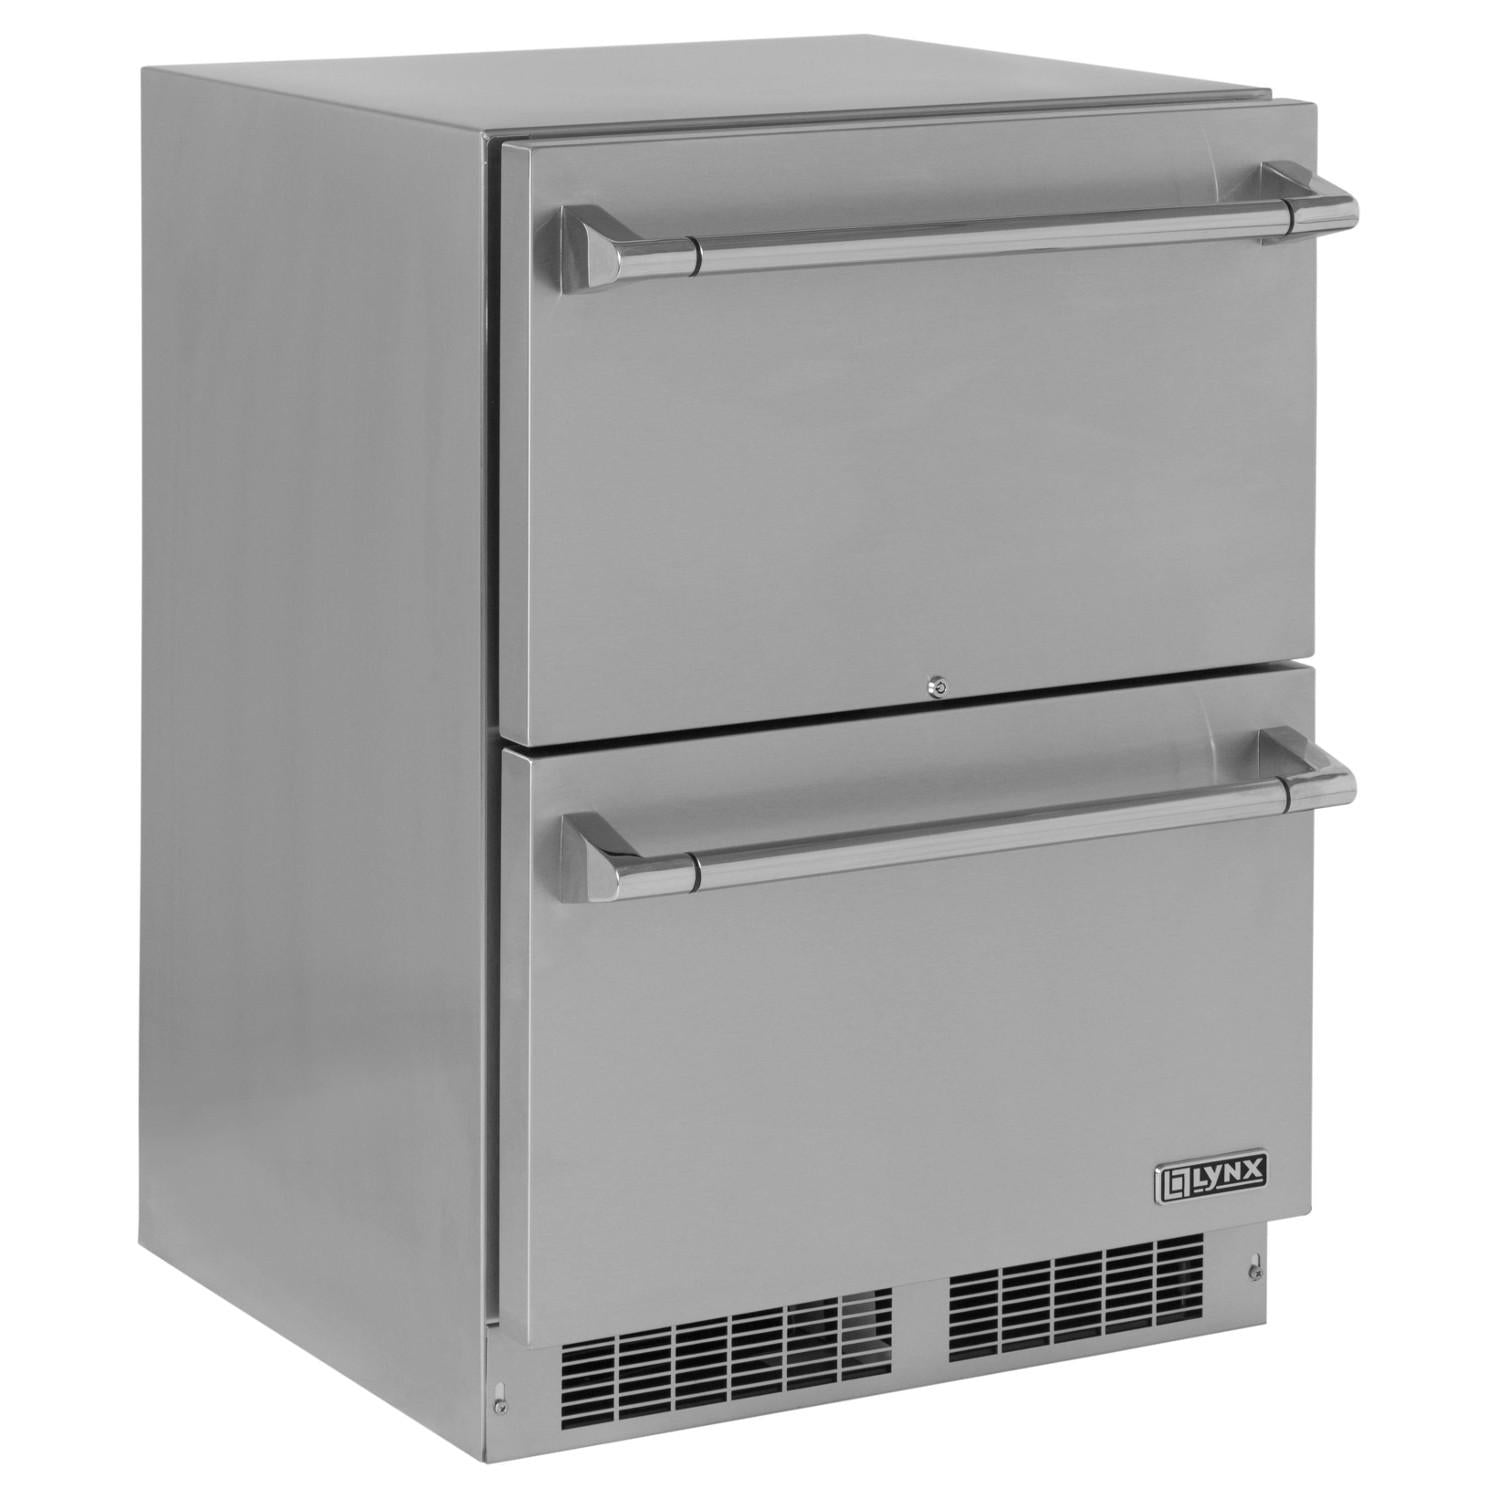 24" Professional Two Drawer Refrigerator